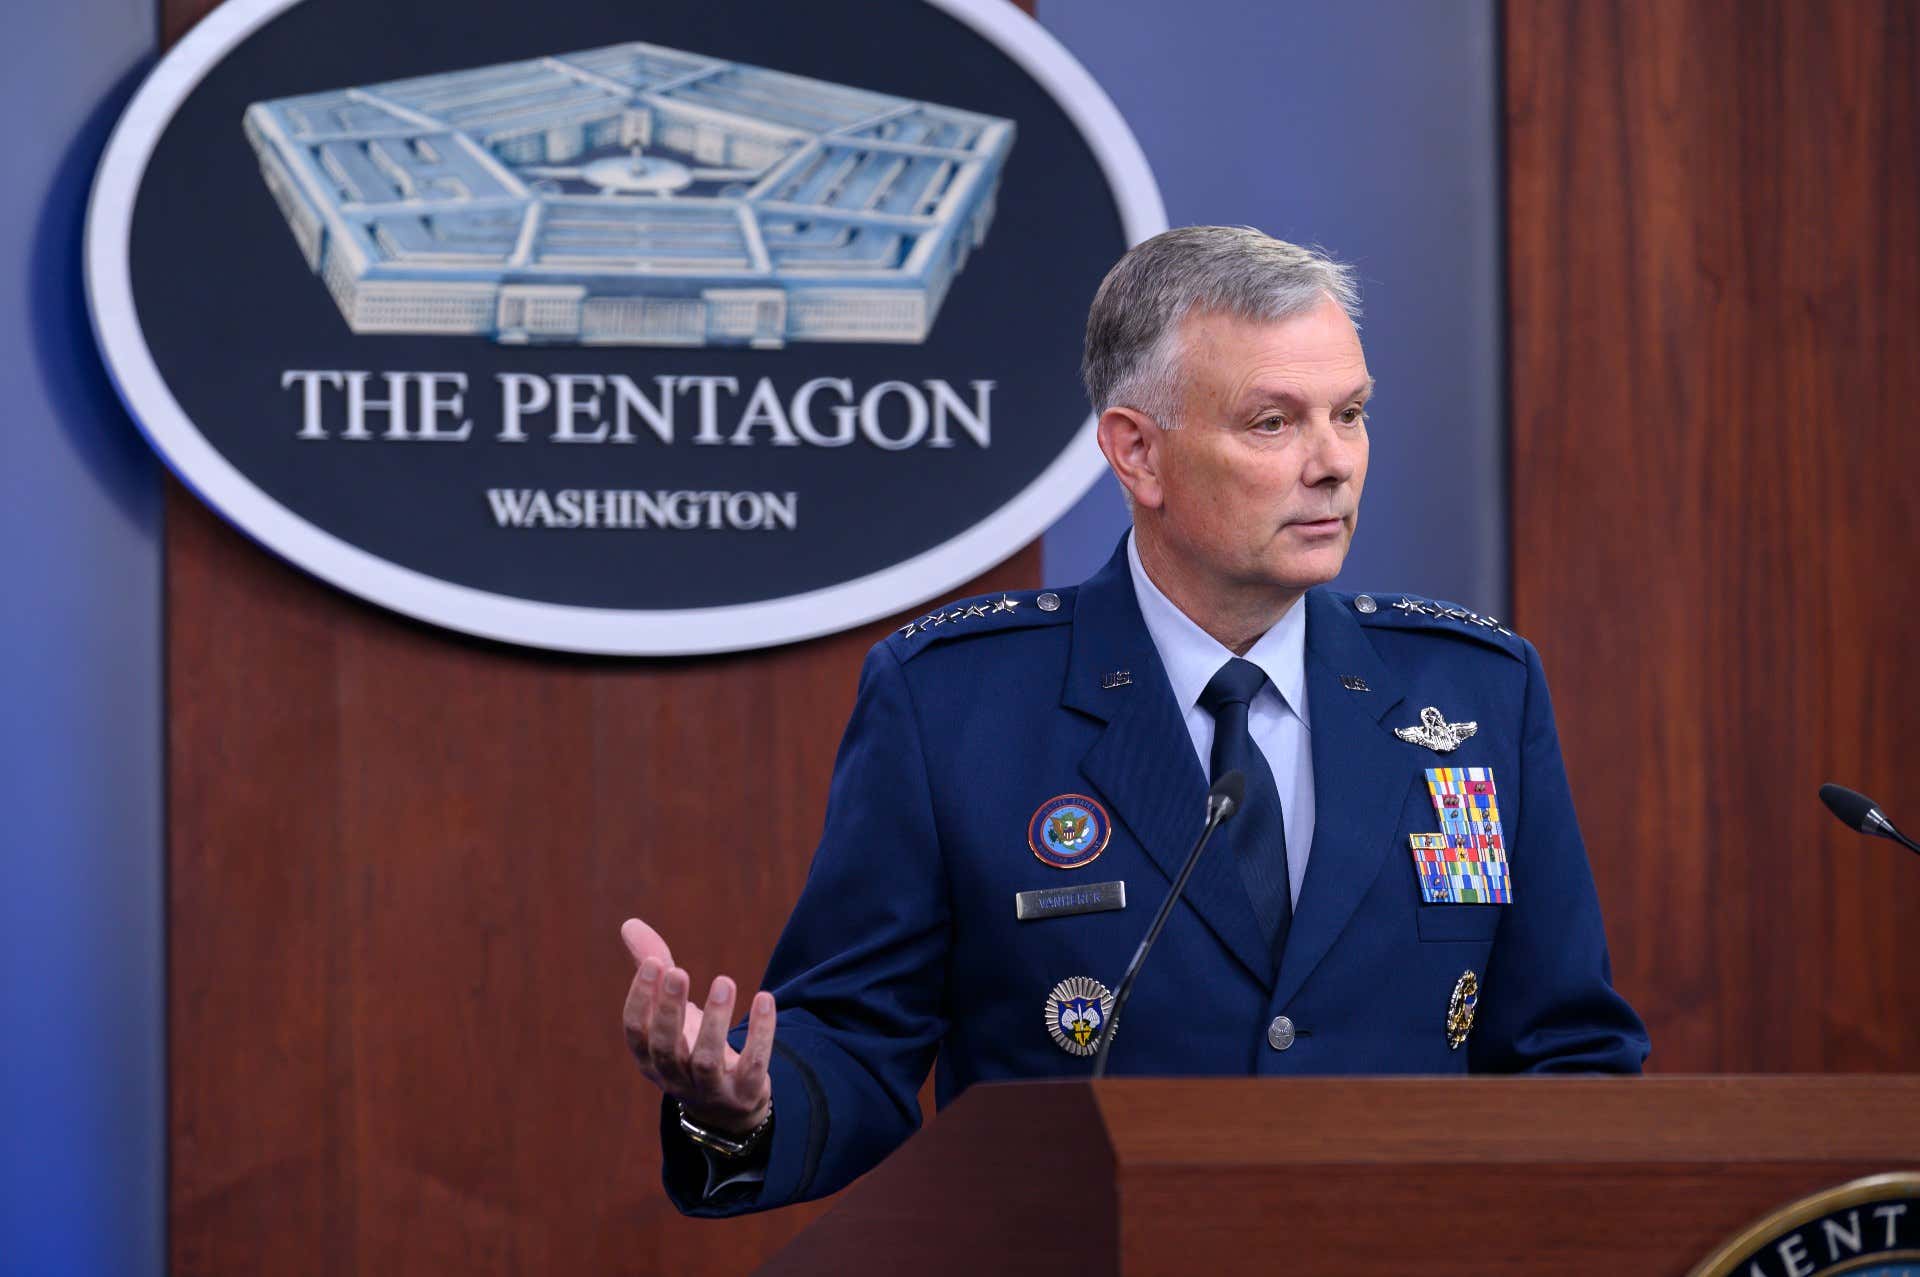  Glen VanHerck, chefe do Comando Norte dos EUA que conduz os testes com inteligência artificial | Foto: Department of Defense/Brittany A. Chase